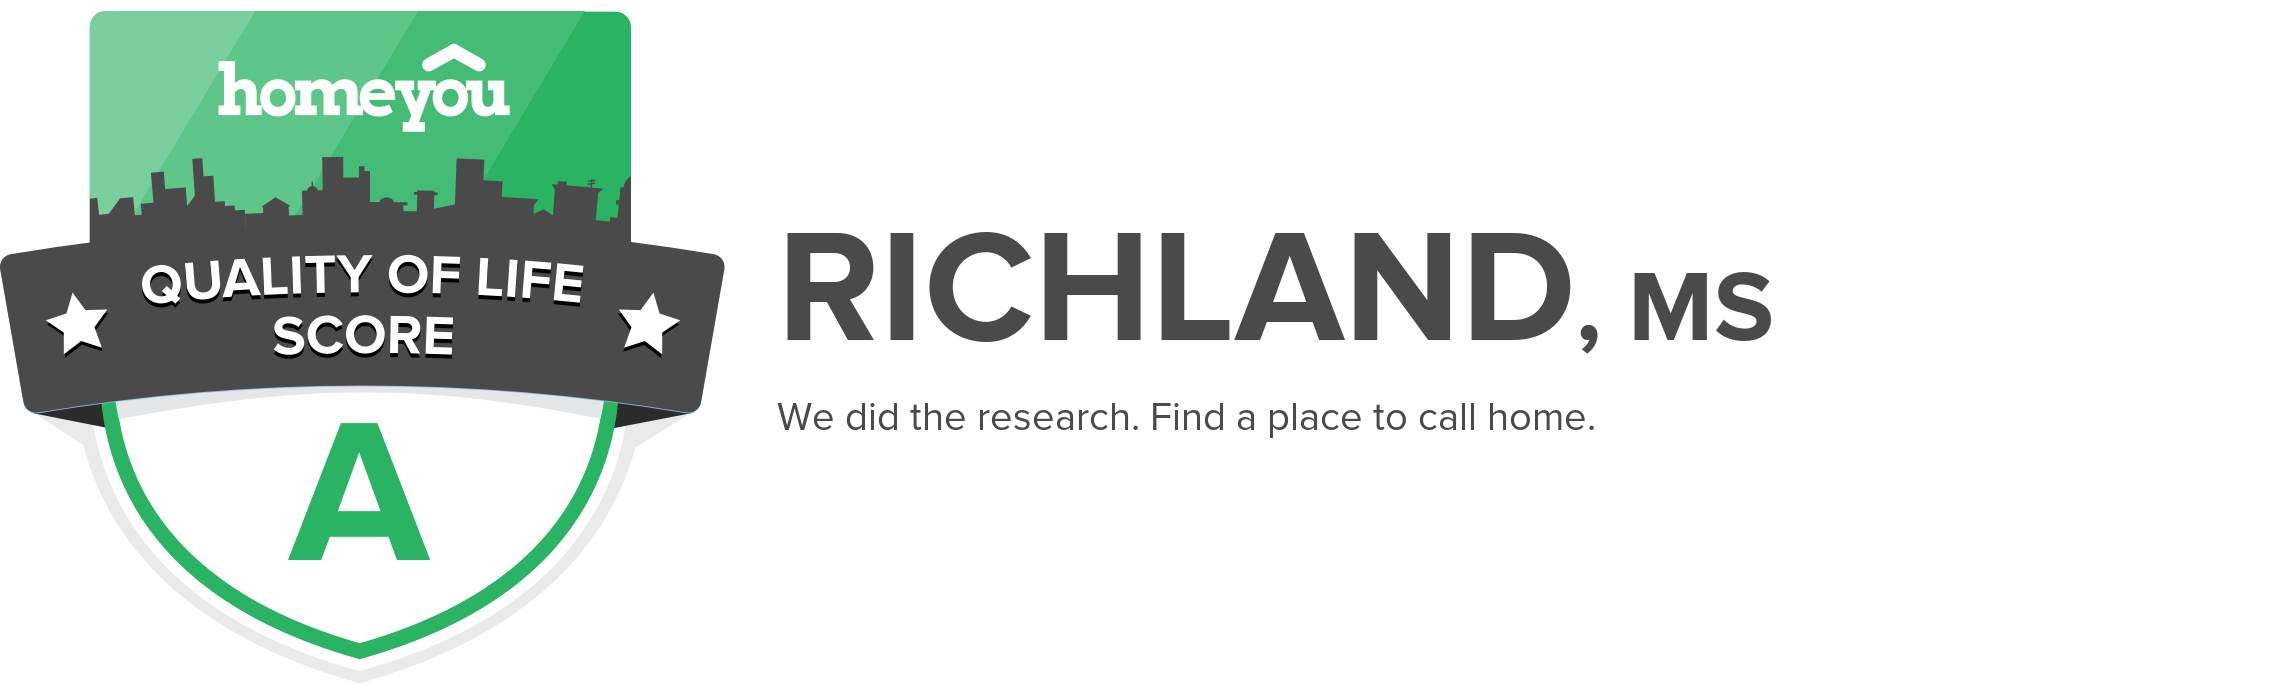 Richland, MS